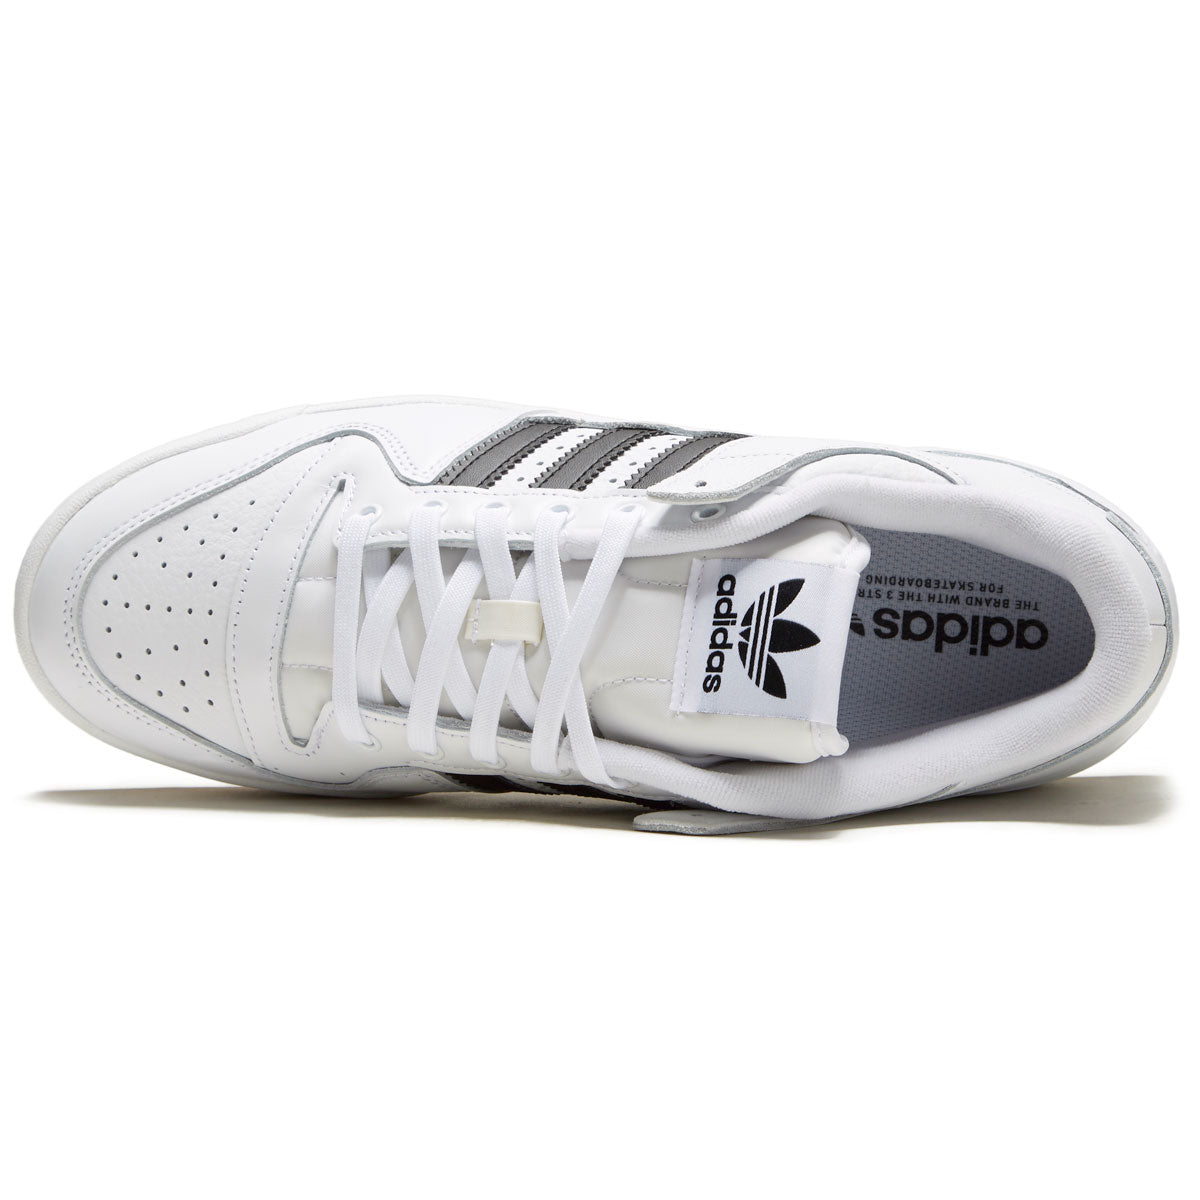 Adidas Forum 84 Low ADV Shoes - White/Core Black/White image 3